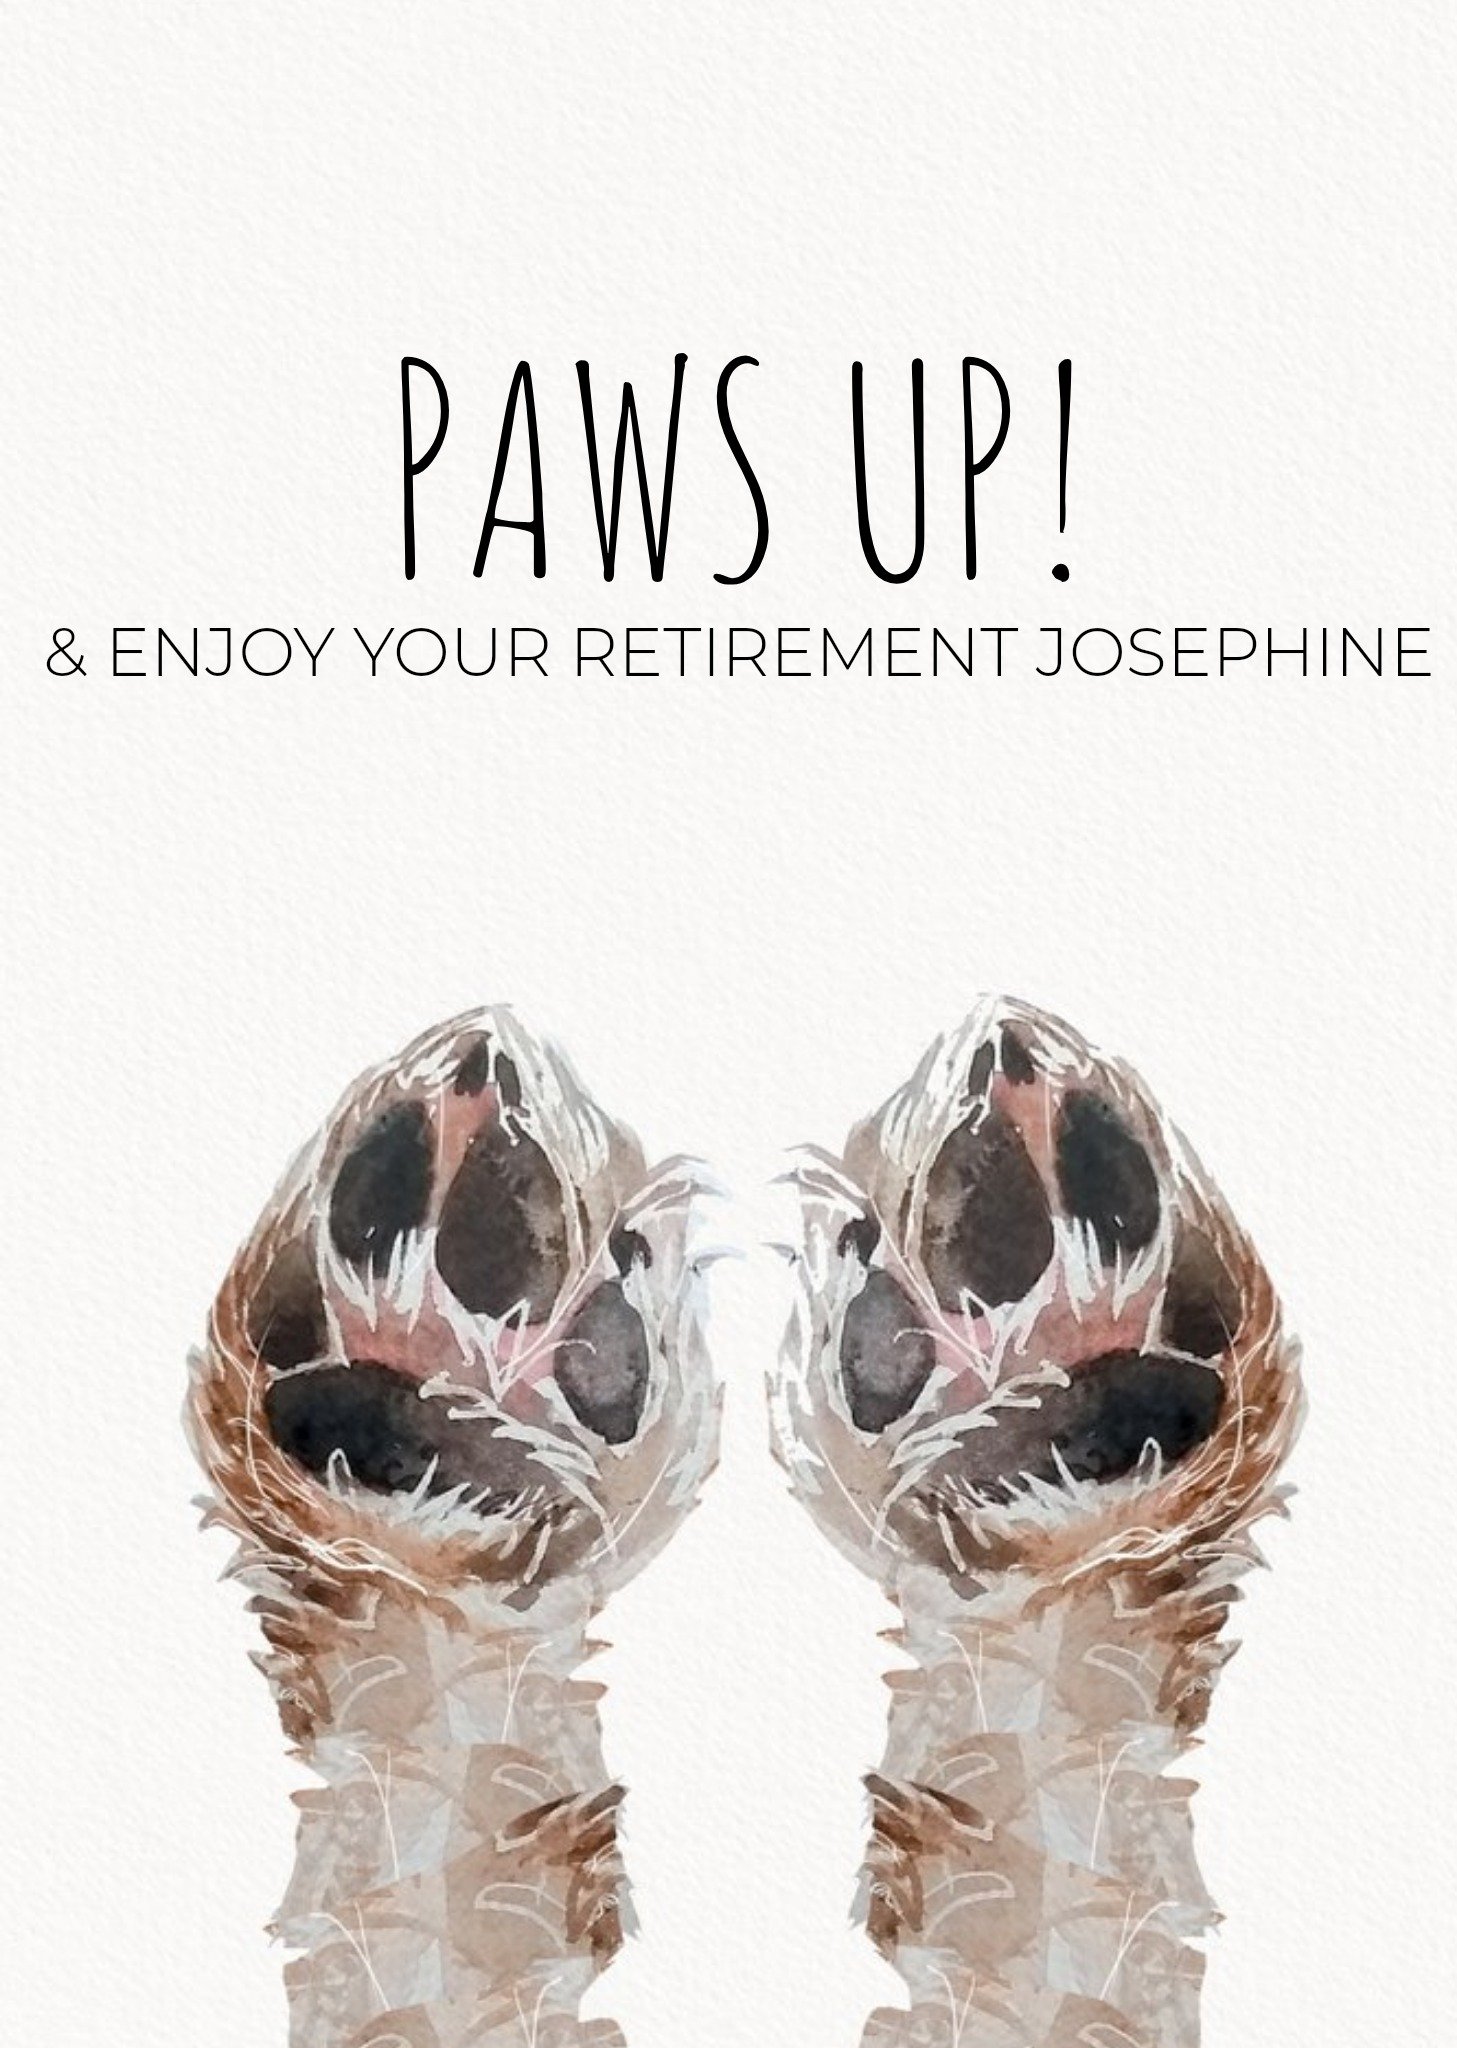 Moonpig Jo Scott Art Retirement Dog Watercolour Cute Paws Up Card, Large